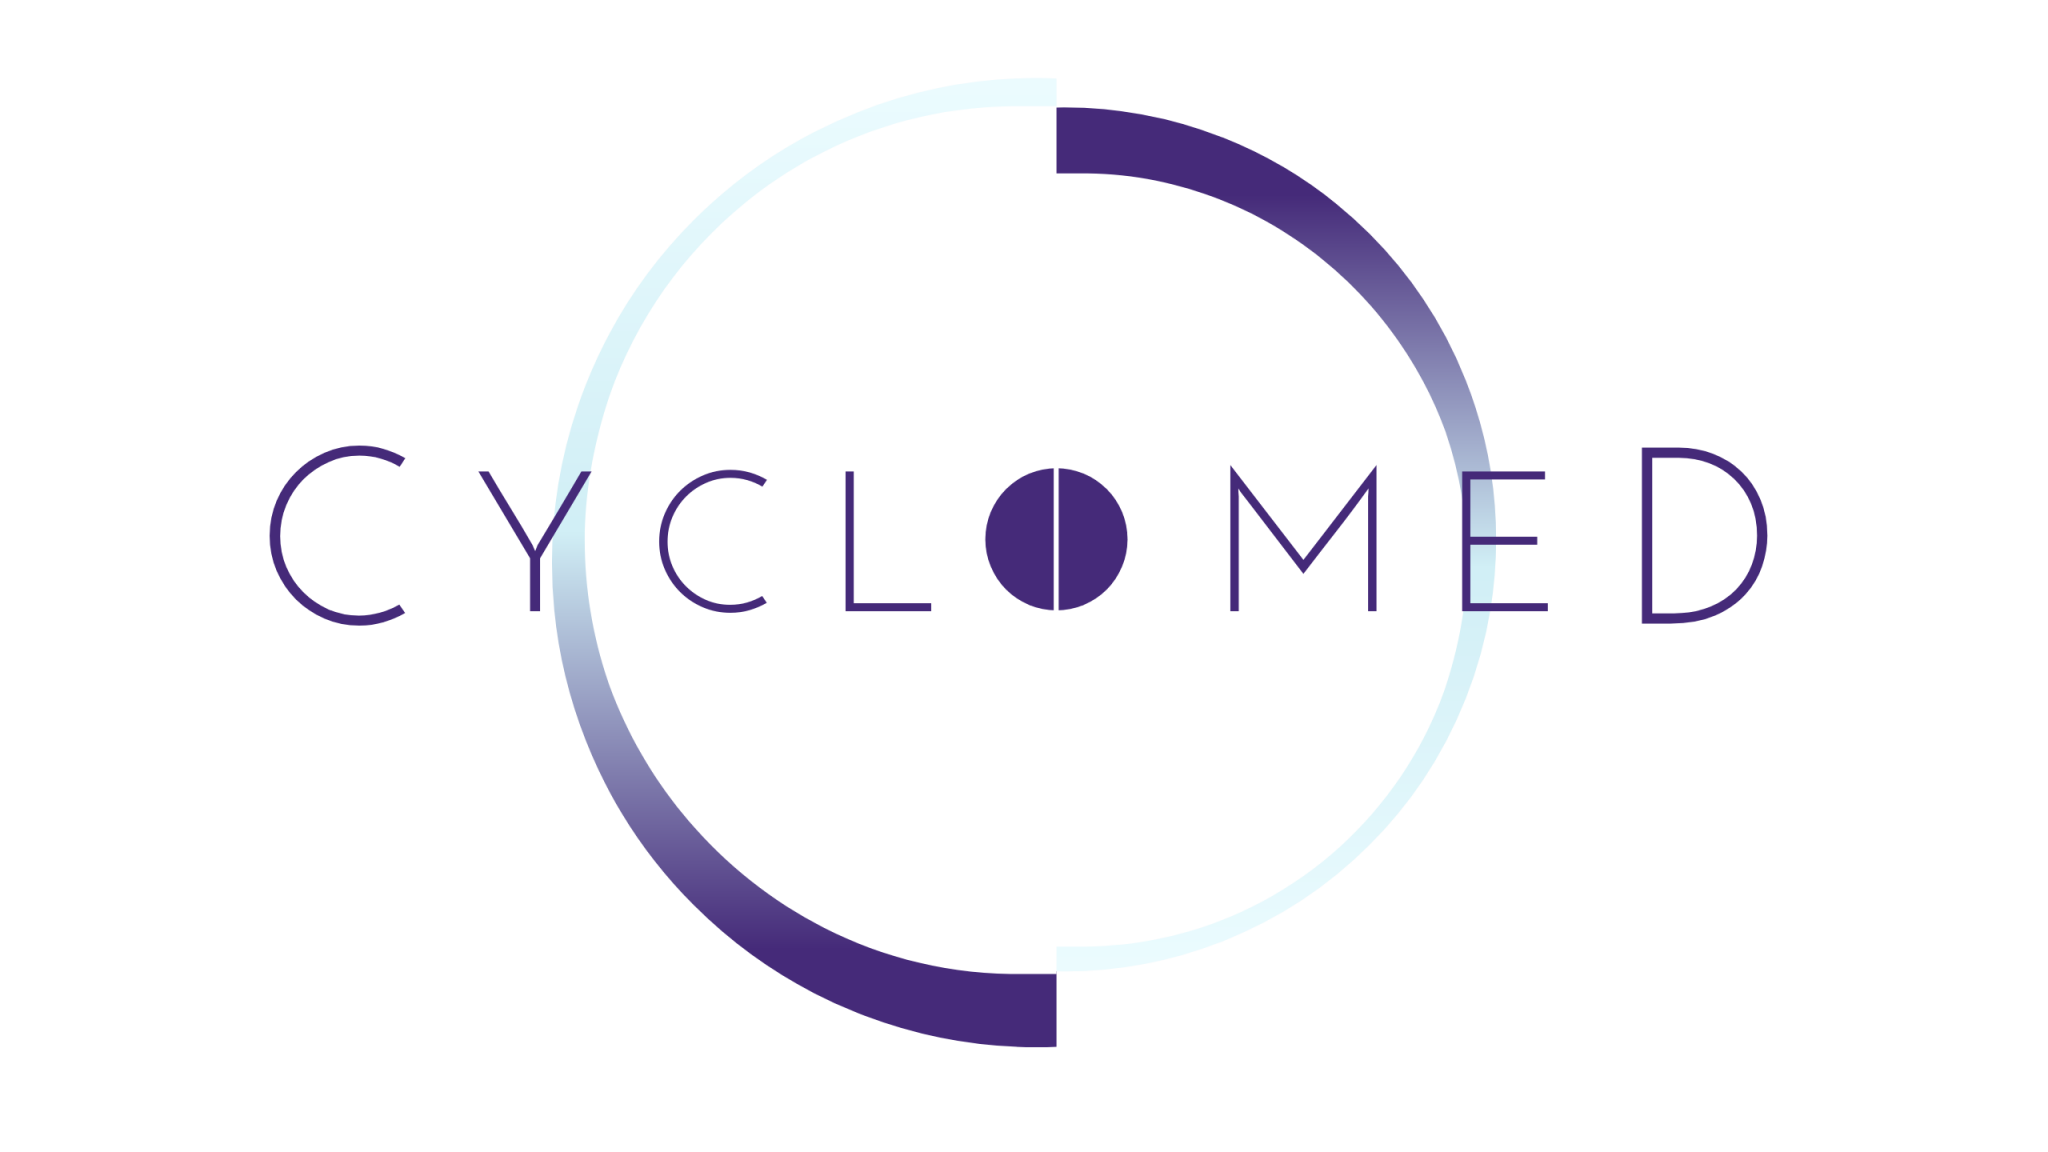 Cyclomed Technologies